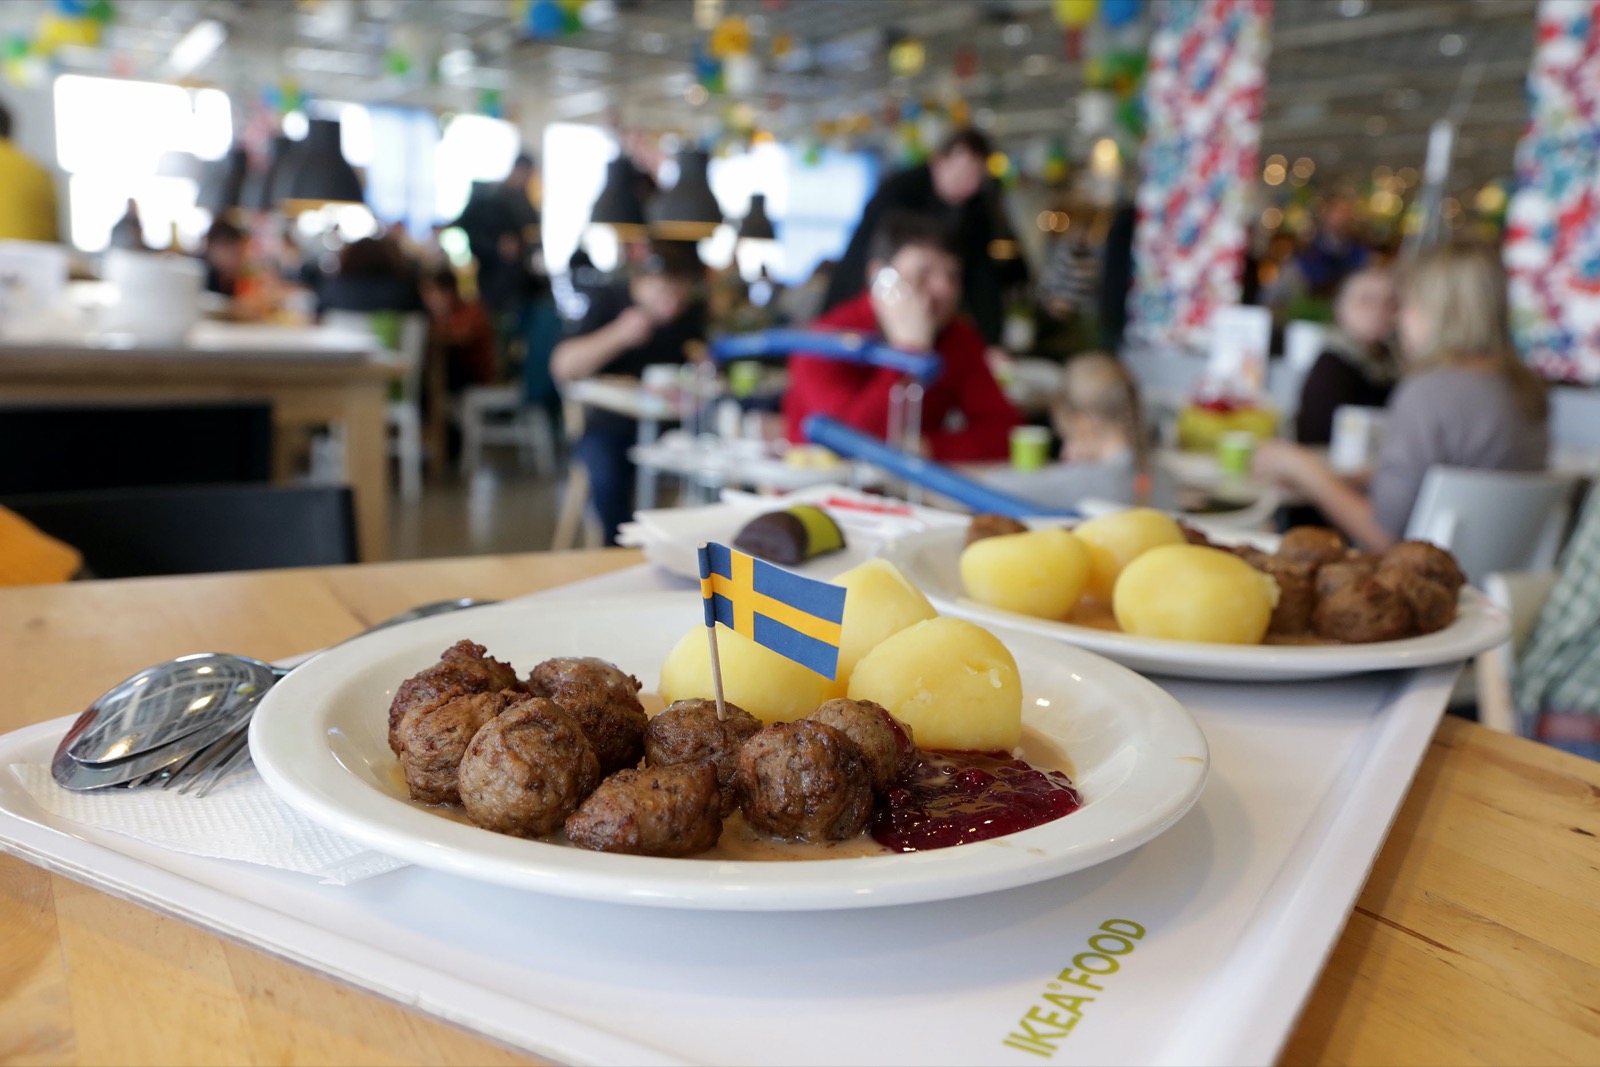 IKEA Swedish meatballs